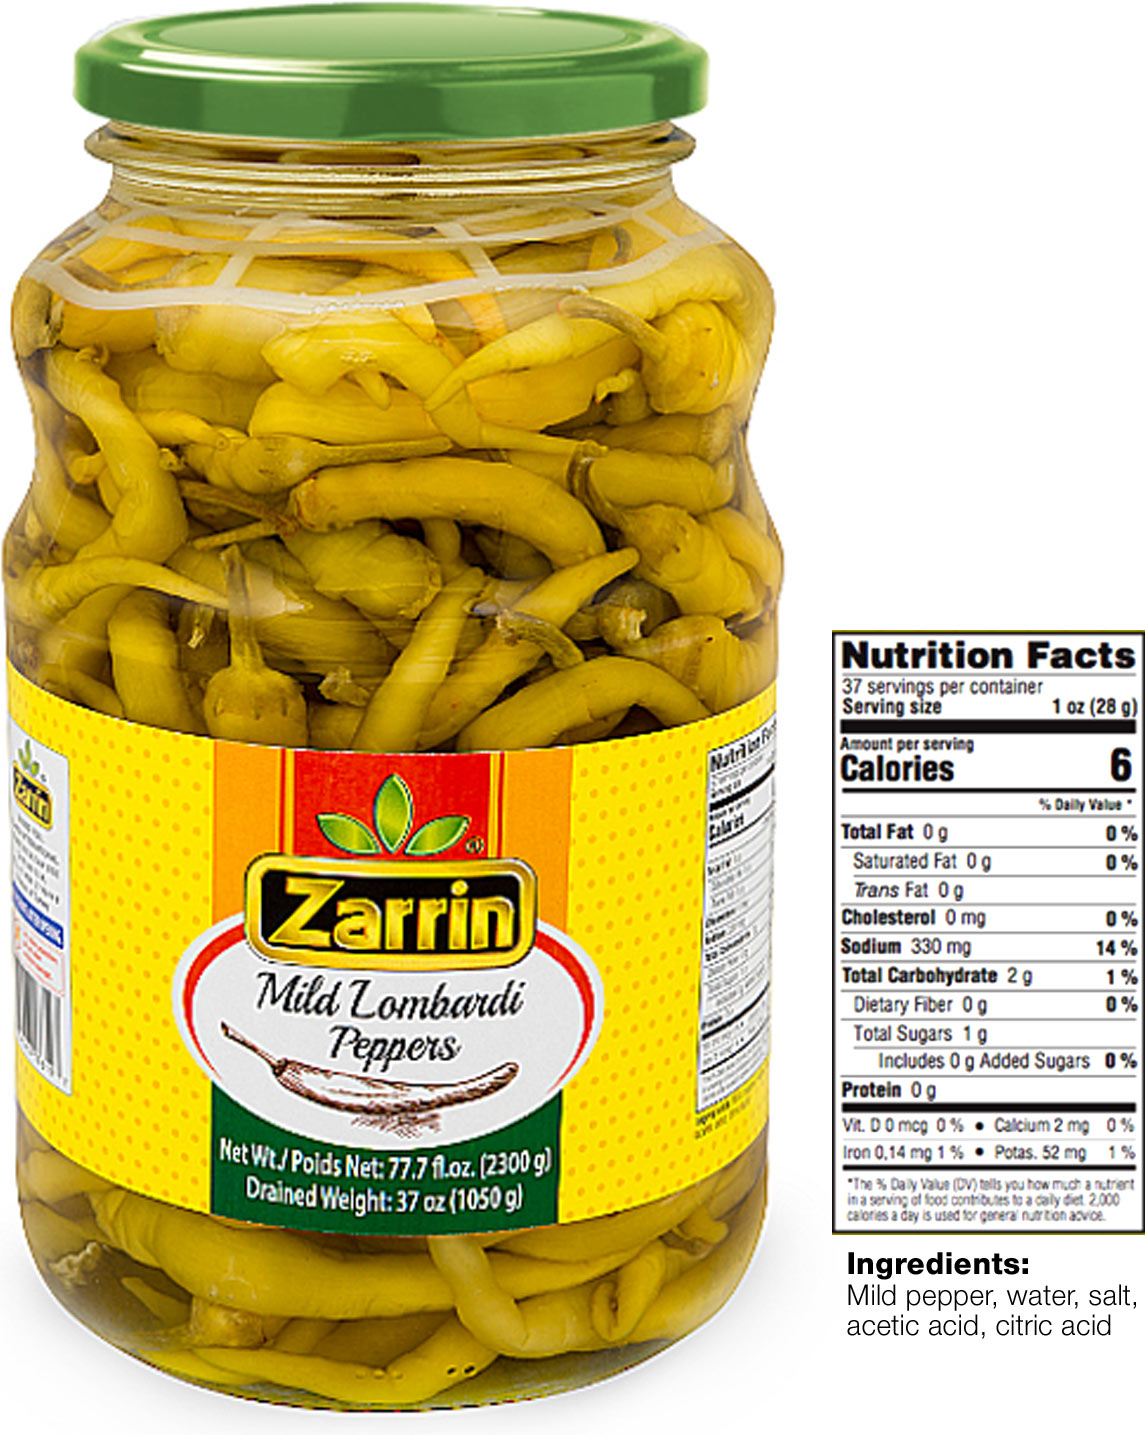 Zarrin mild lombardi peppers in 77.7 oz glass jar.